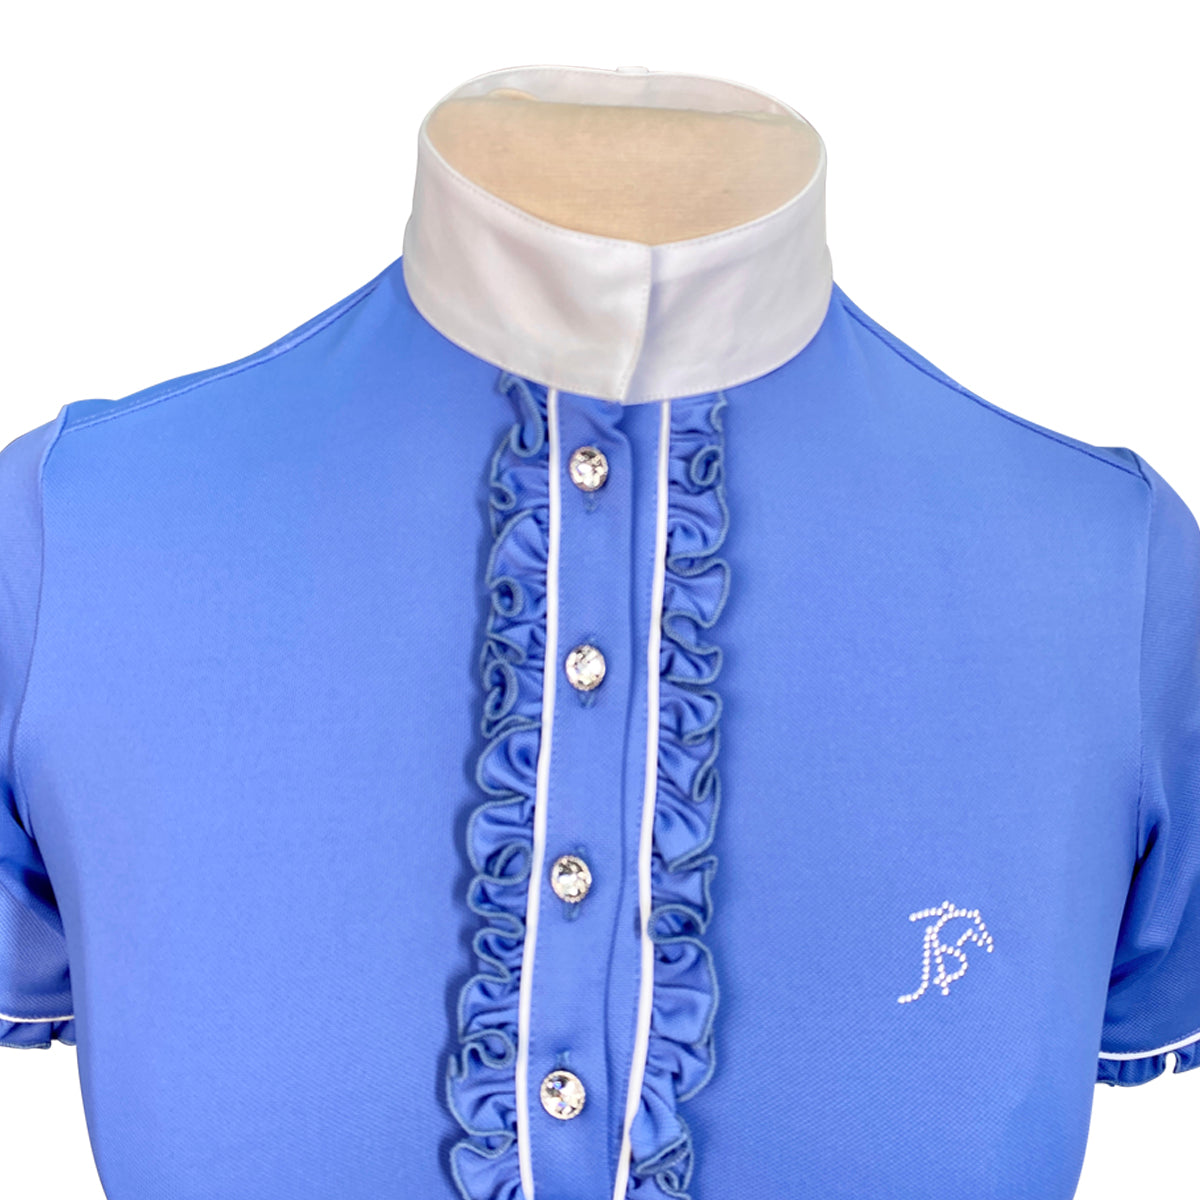 Anna Scarpati 'Ferna' Competition Shirt in Blue